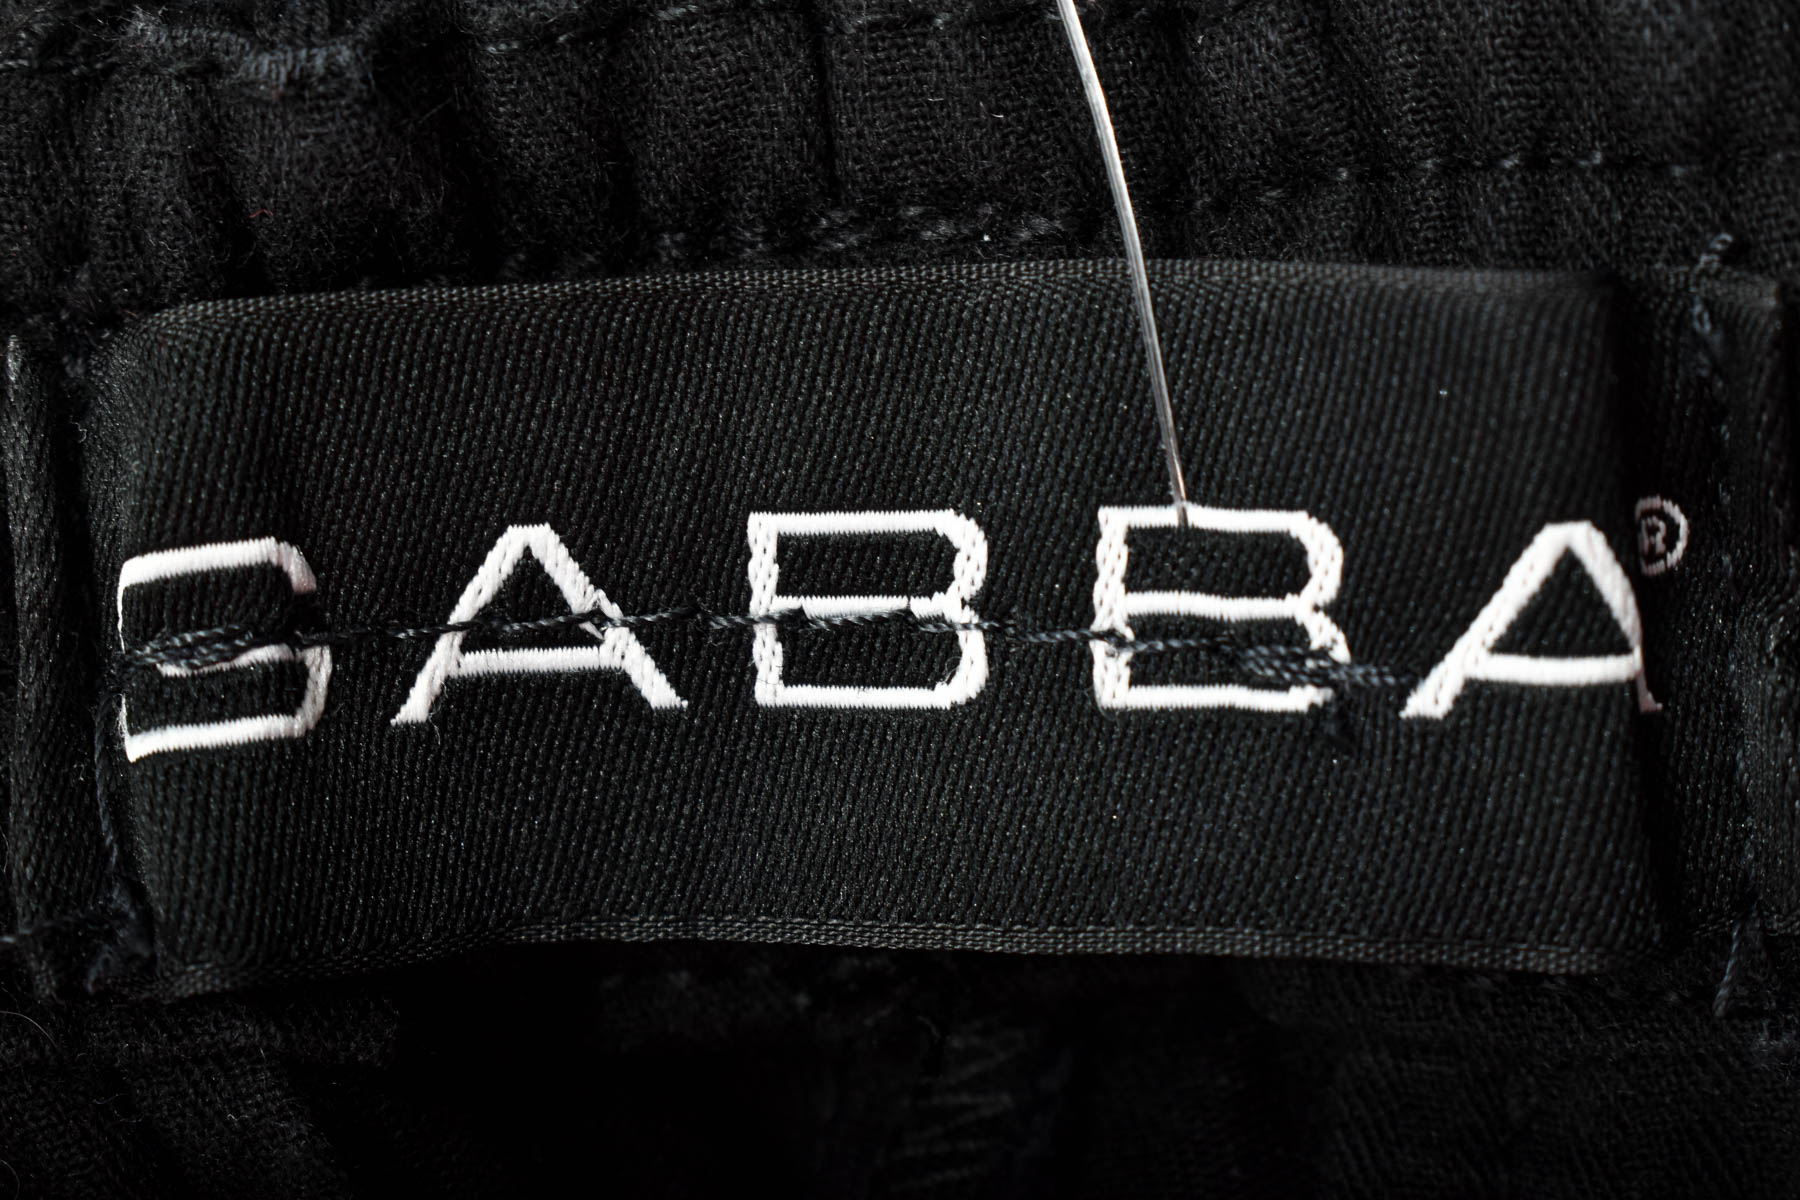 Мъжки панталон - Gabba - 2